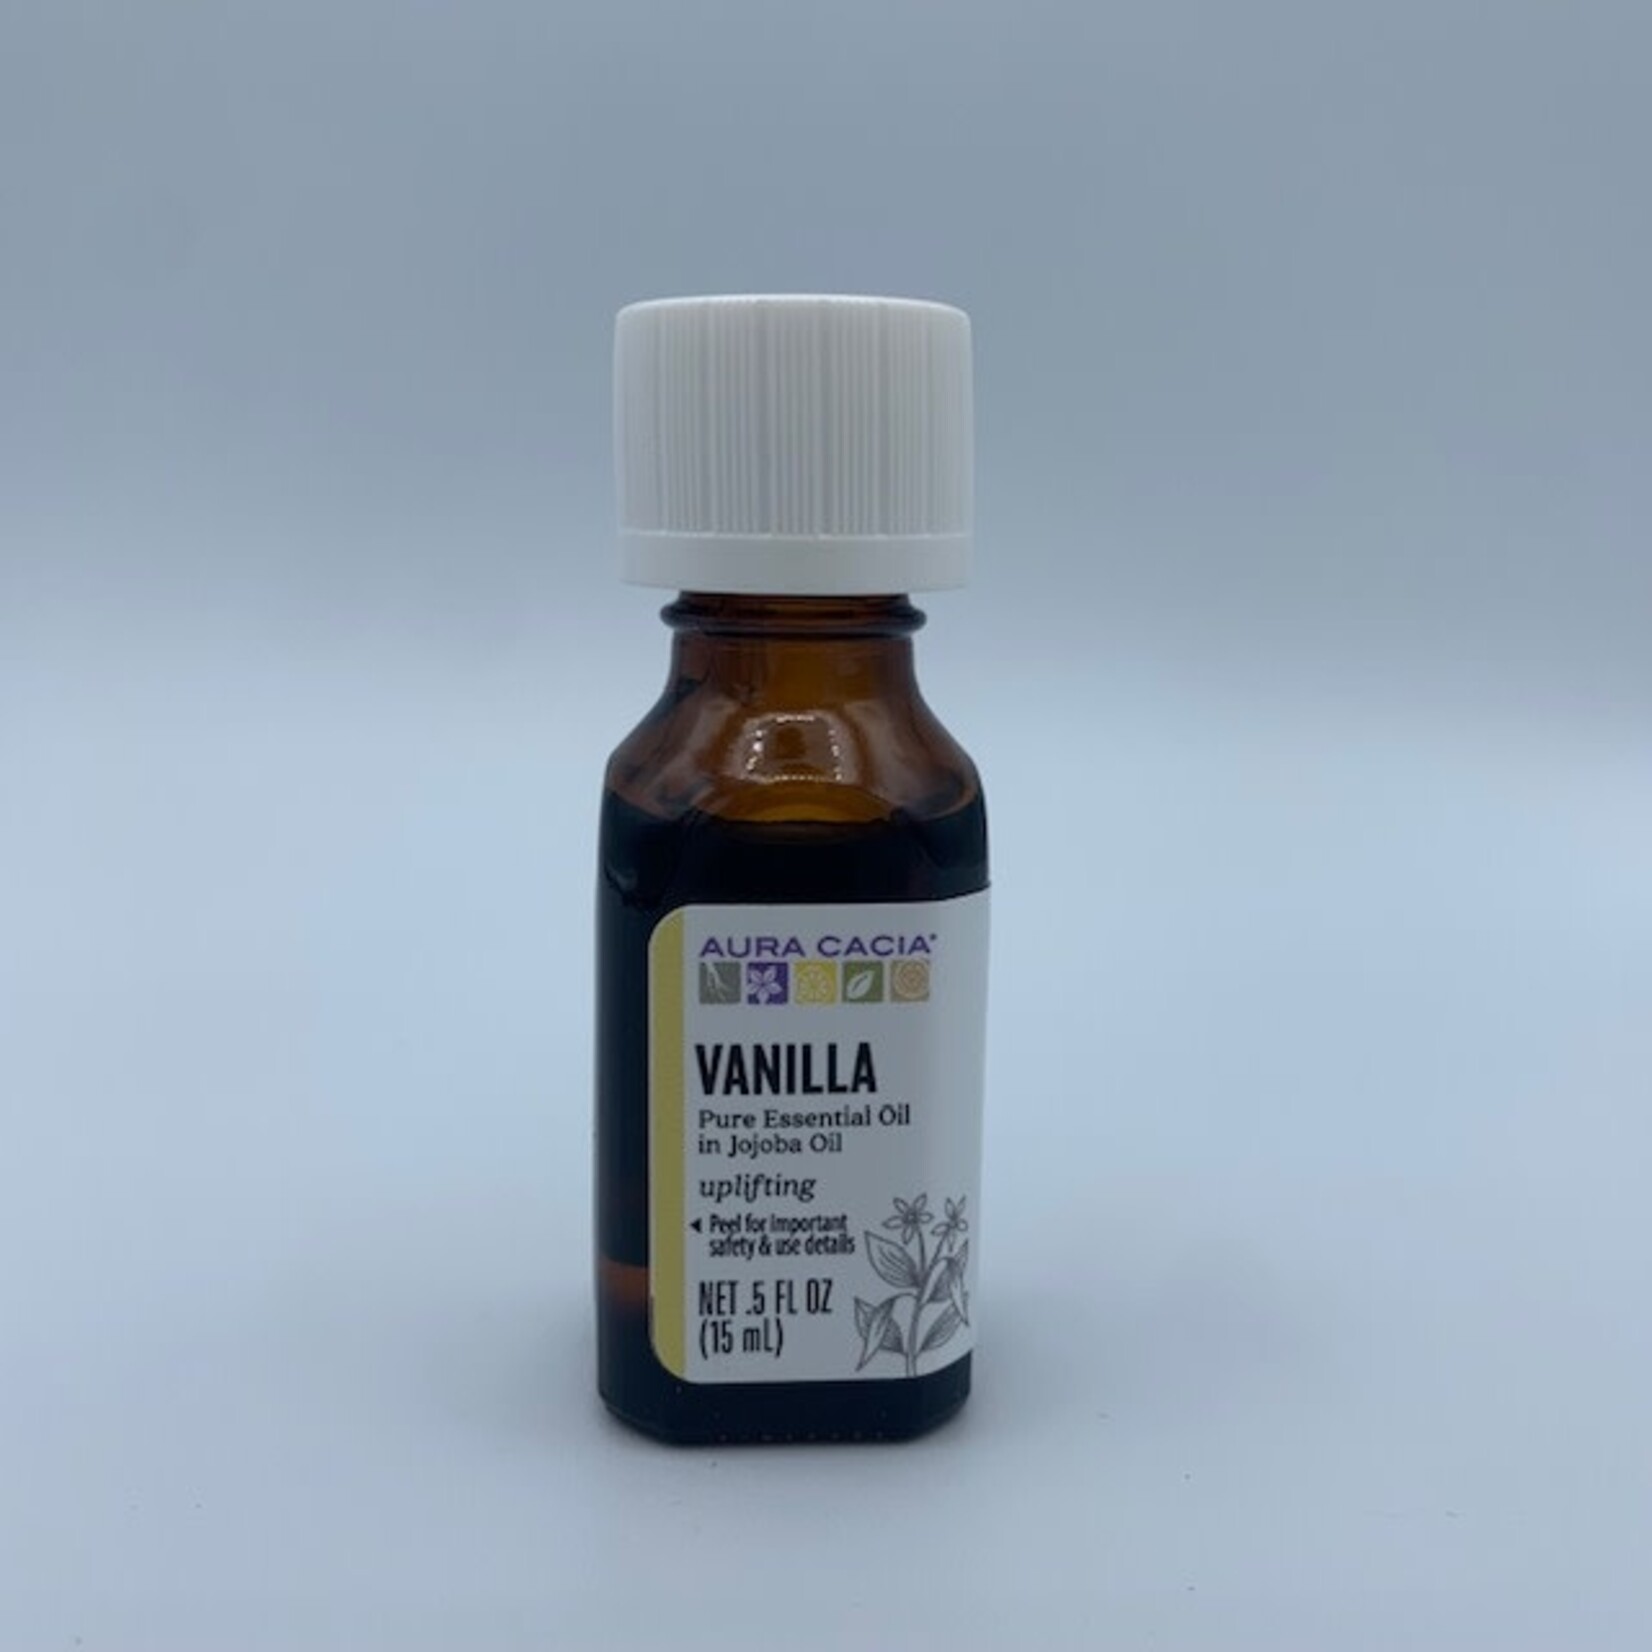 Aura Cacia Aura Cacia Essential Oil - Vanilla in Jojoba Oil, .5 oz